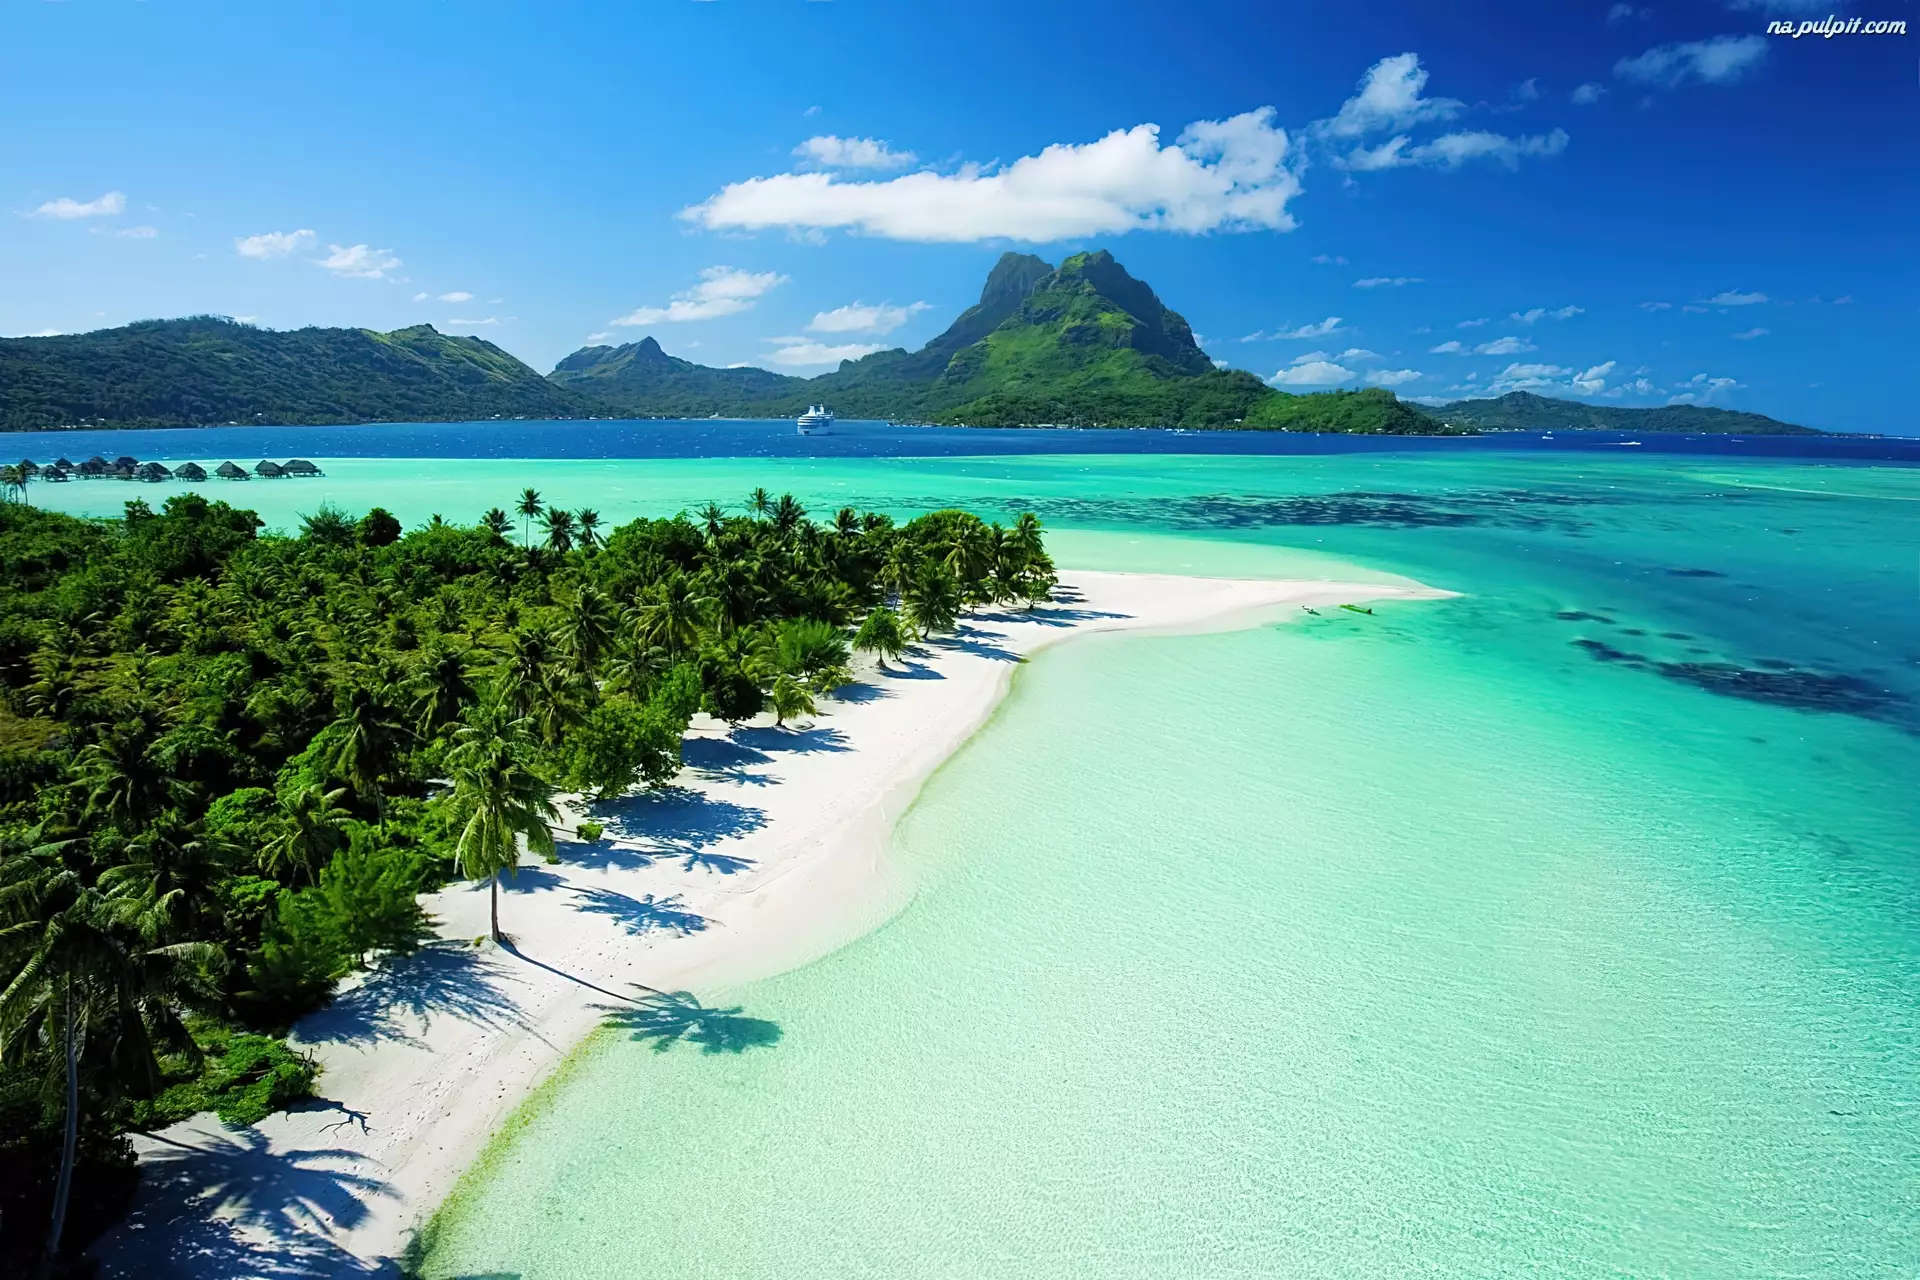 Ocean, Bora Bora, Plaża, Wyspa